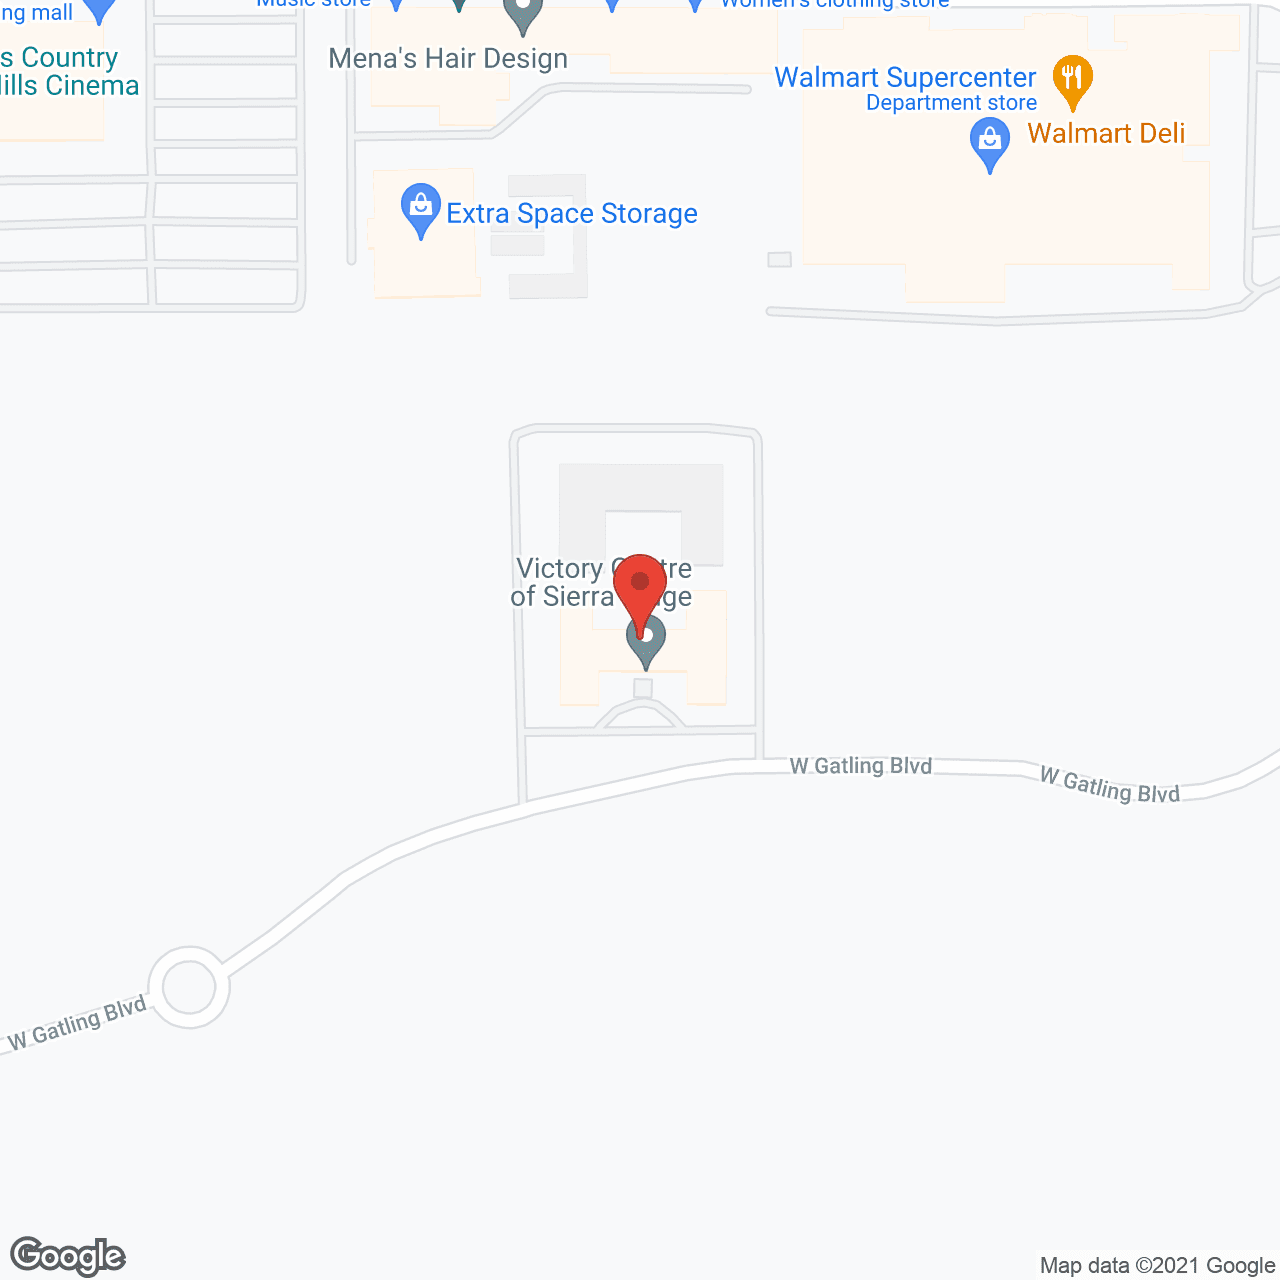 Victory Centre of Sierra Ridge in google map